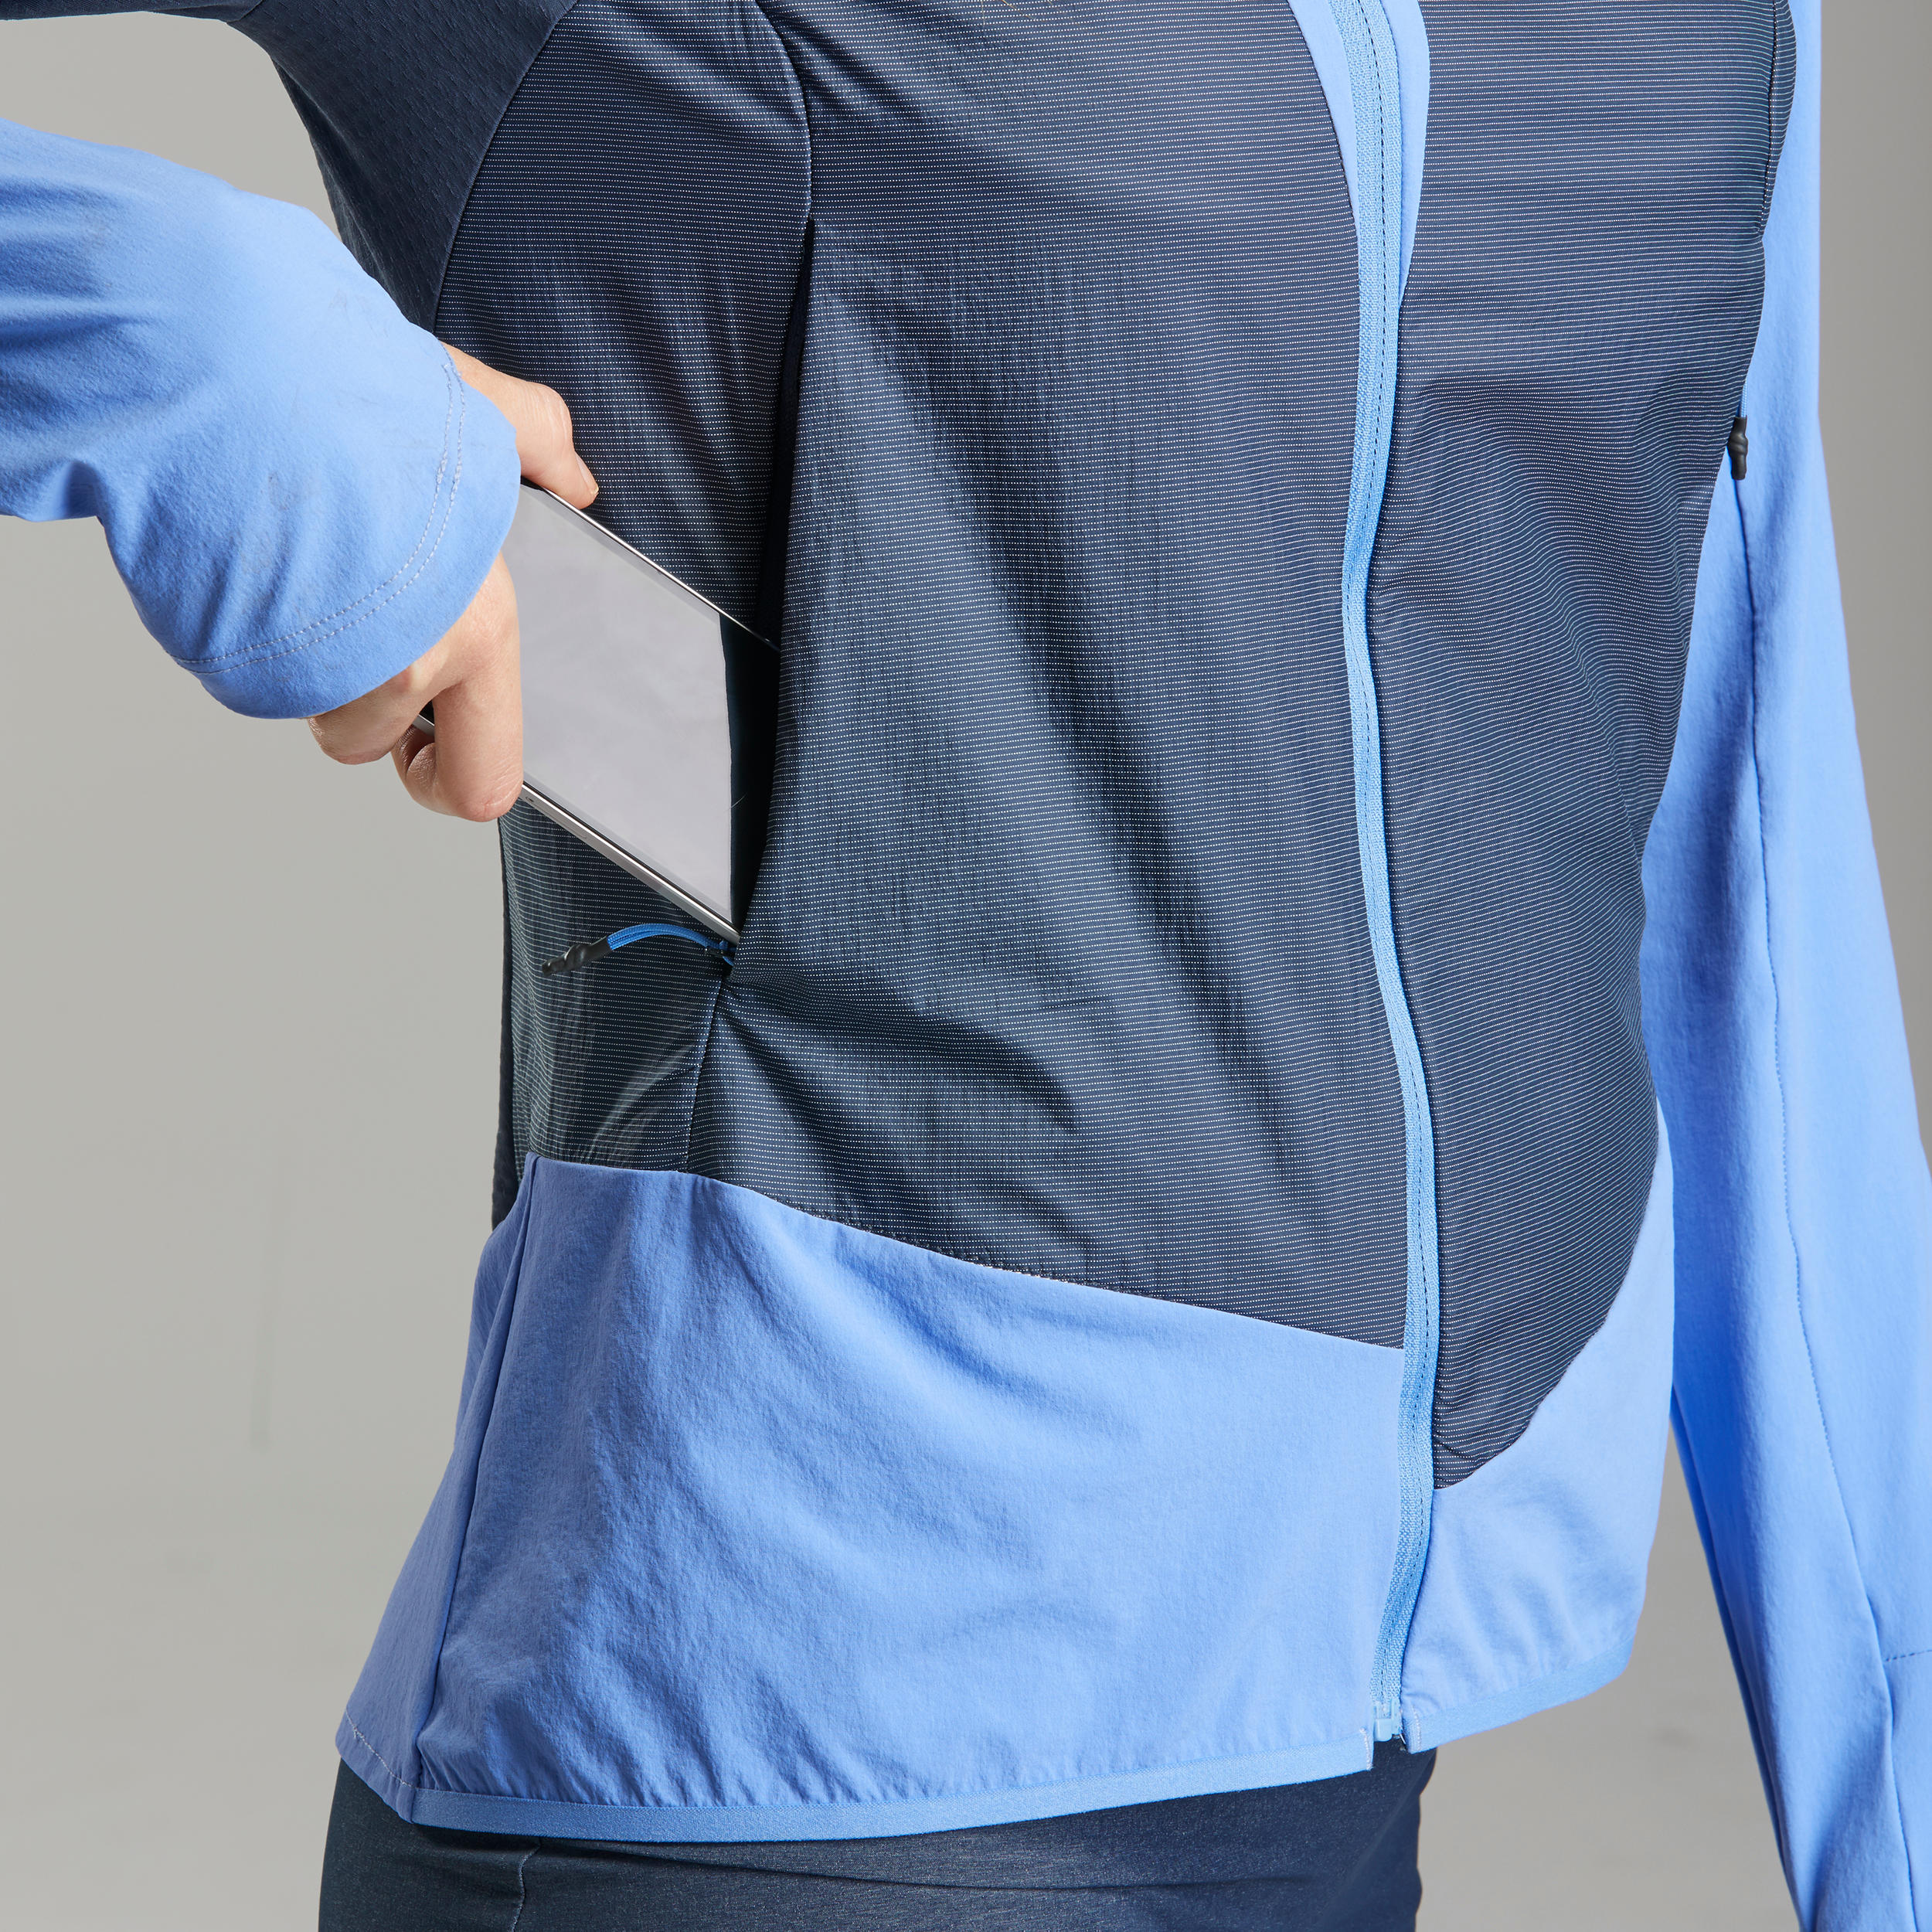 Women’s Warm Jacket For Fast Hiking FH 900 Hybrid - Blue 1/7